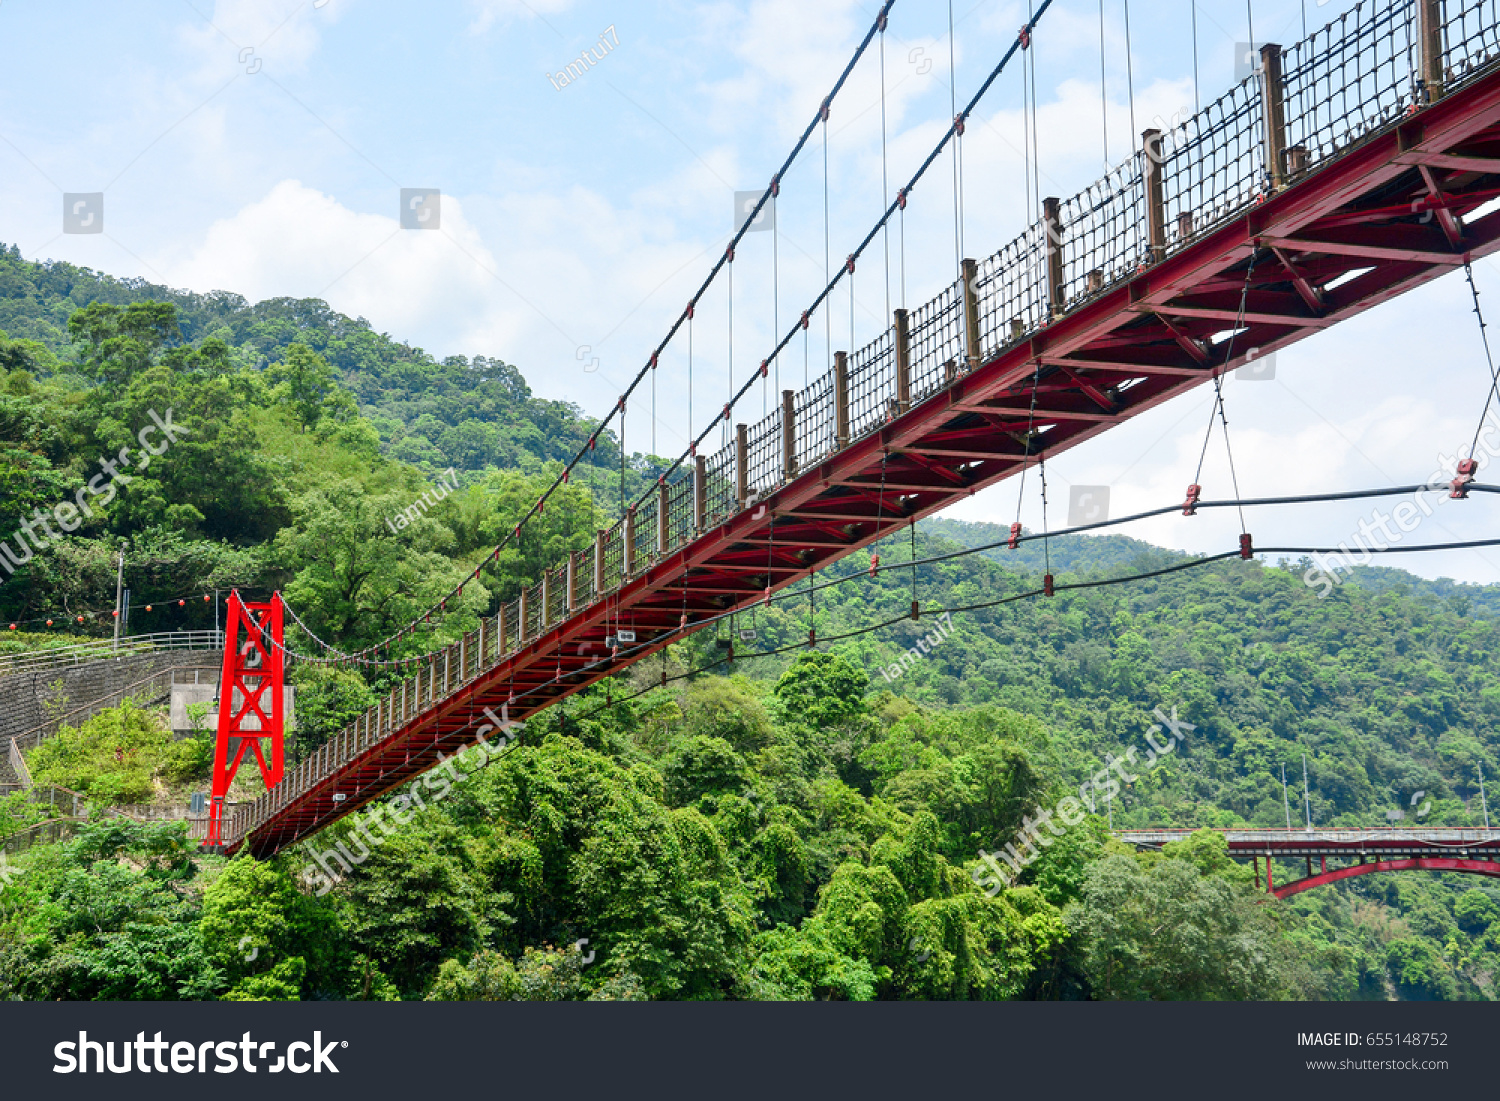 red hanging bridge or suspension bridge in the valley, Wulai, Taiwan #655148752